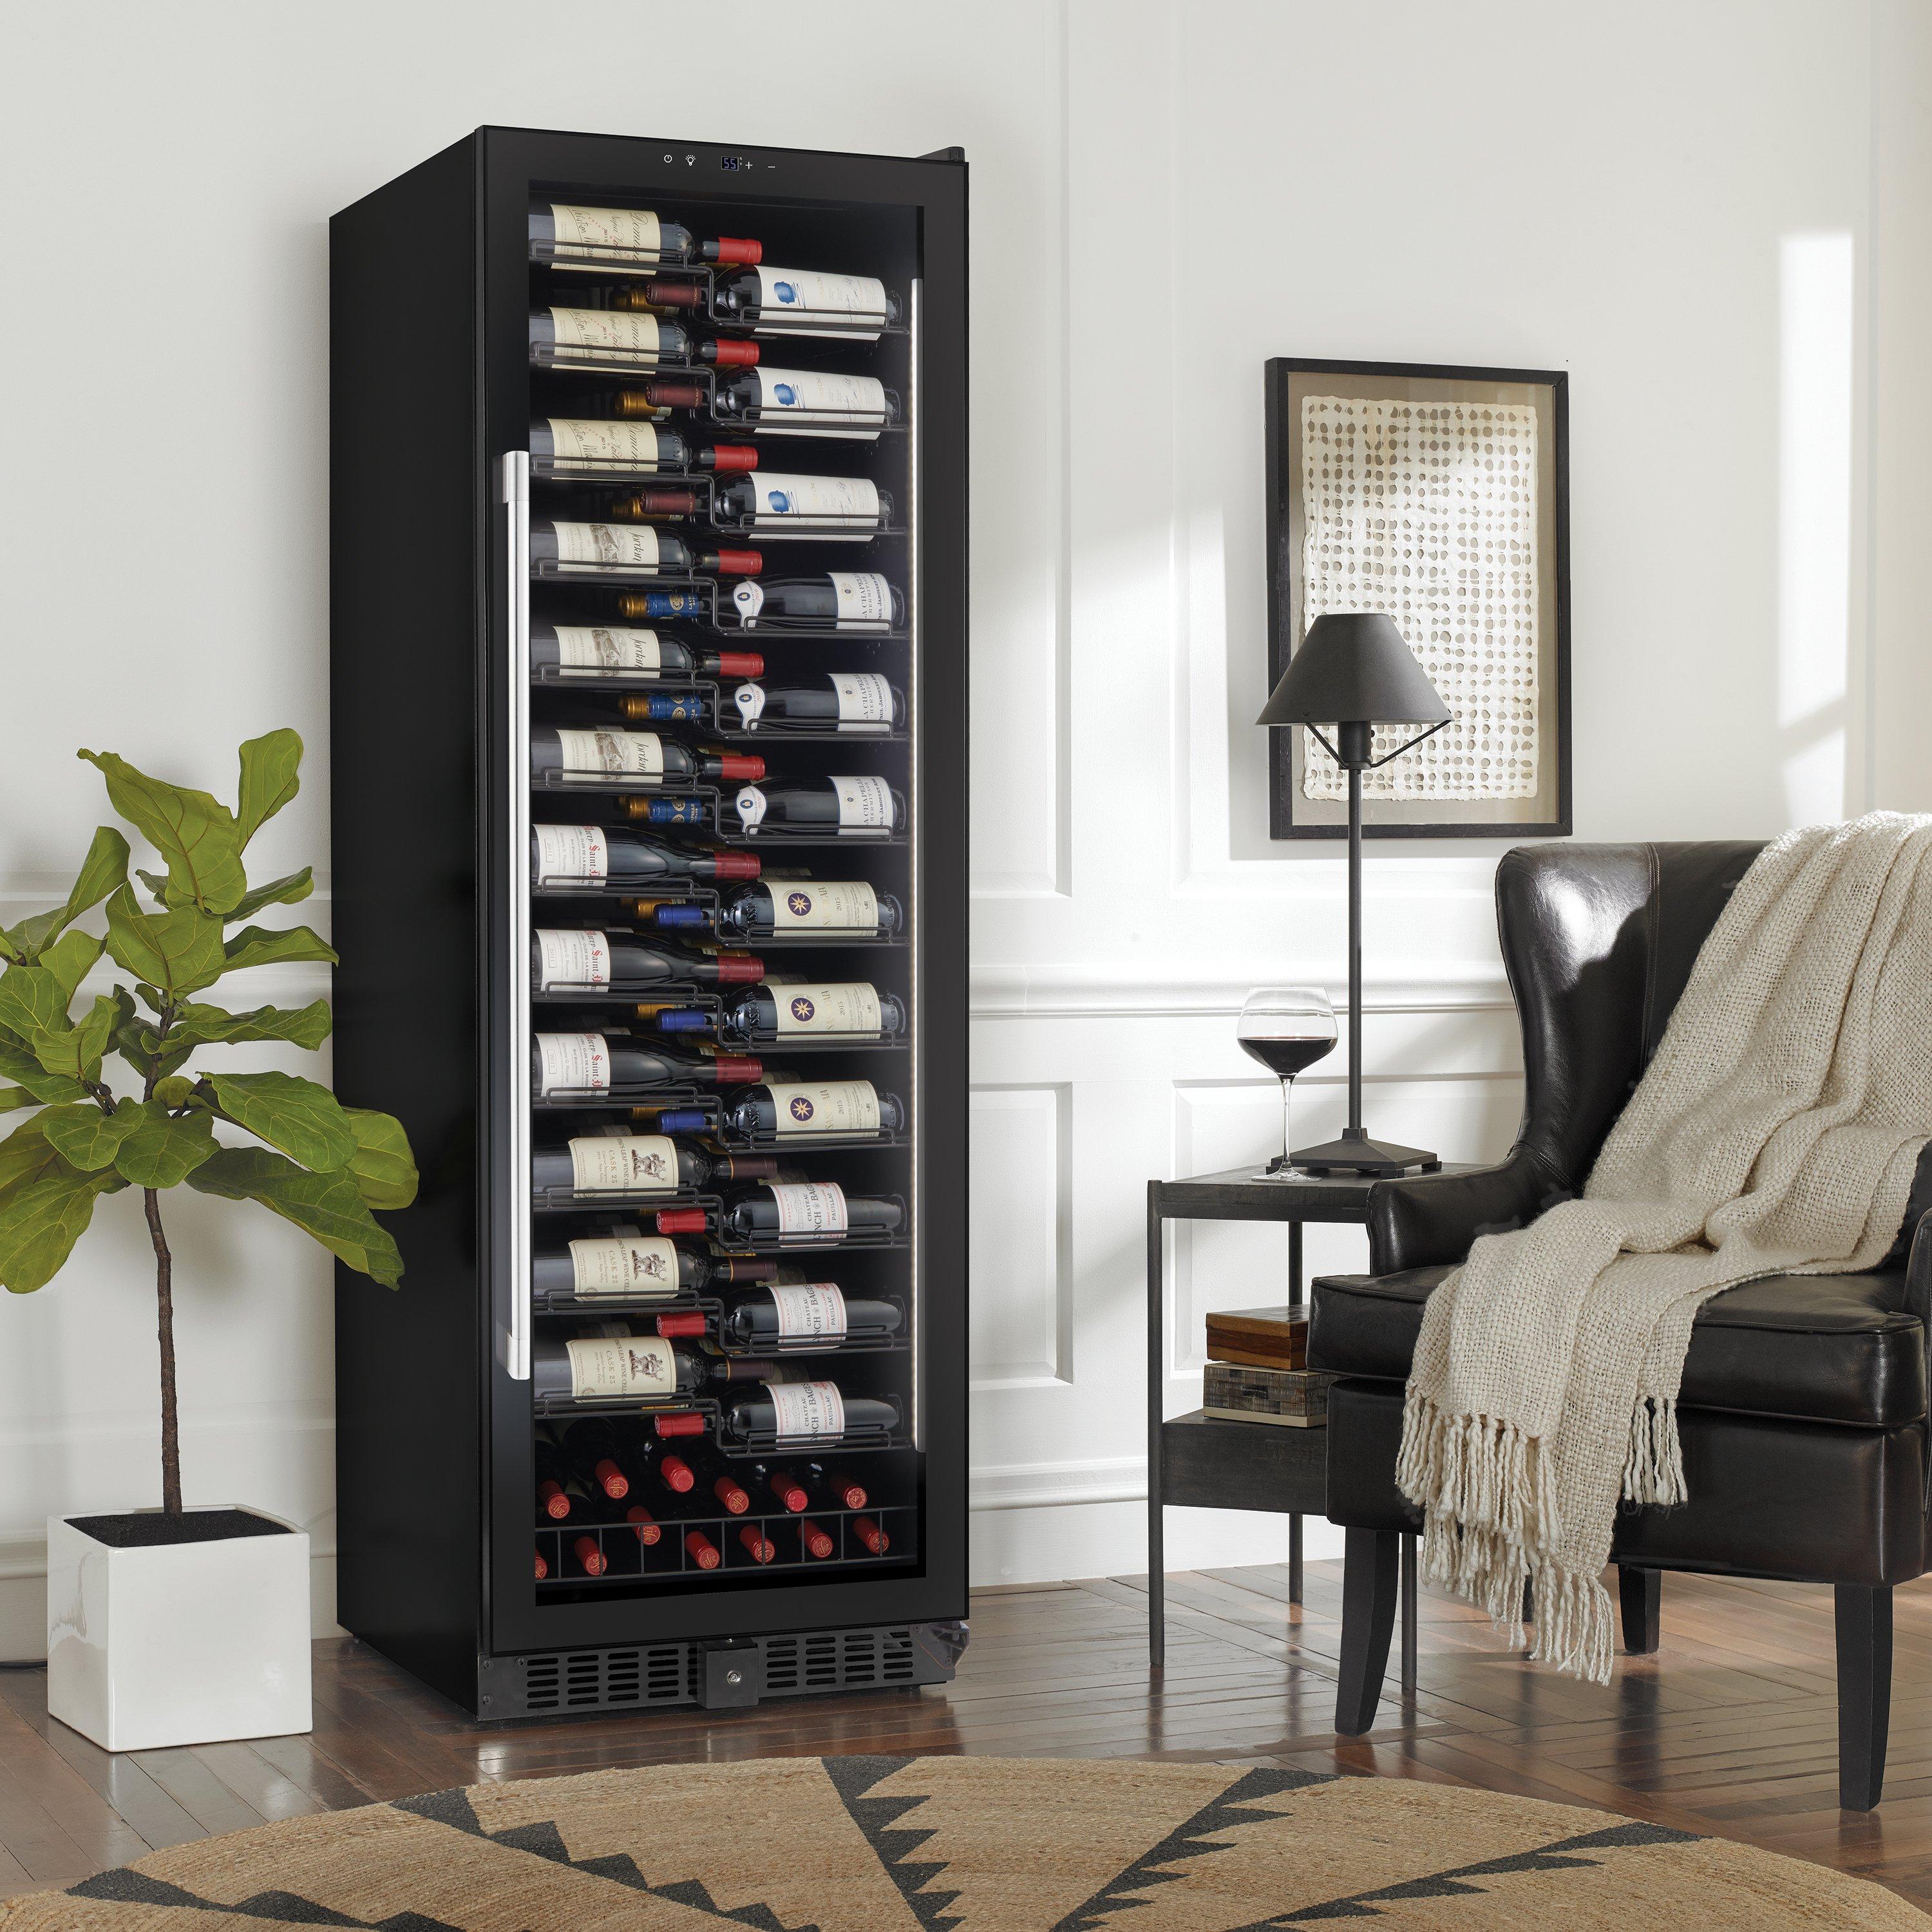 Wine Enthusiast VinoView L 155 Smart Wi-Fi Wine Cellar - Wine Enthusiast